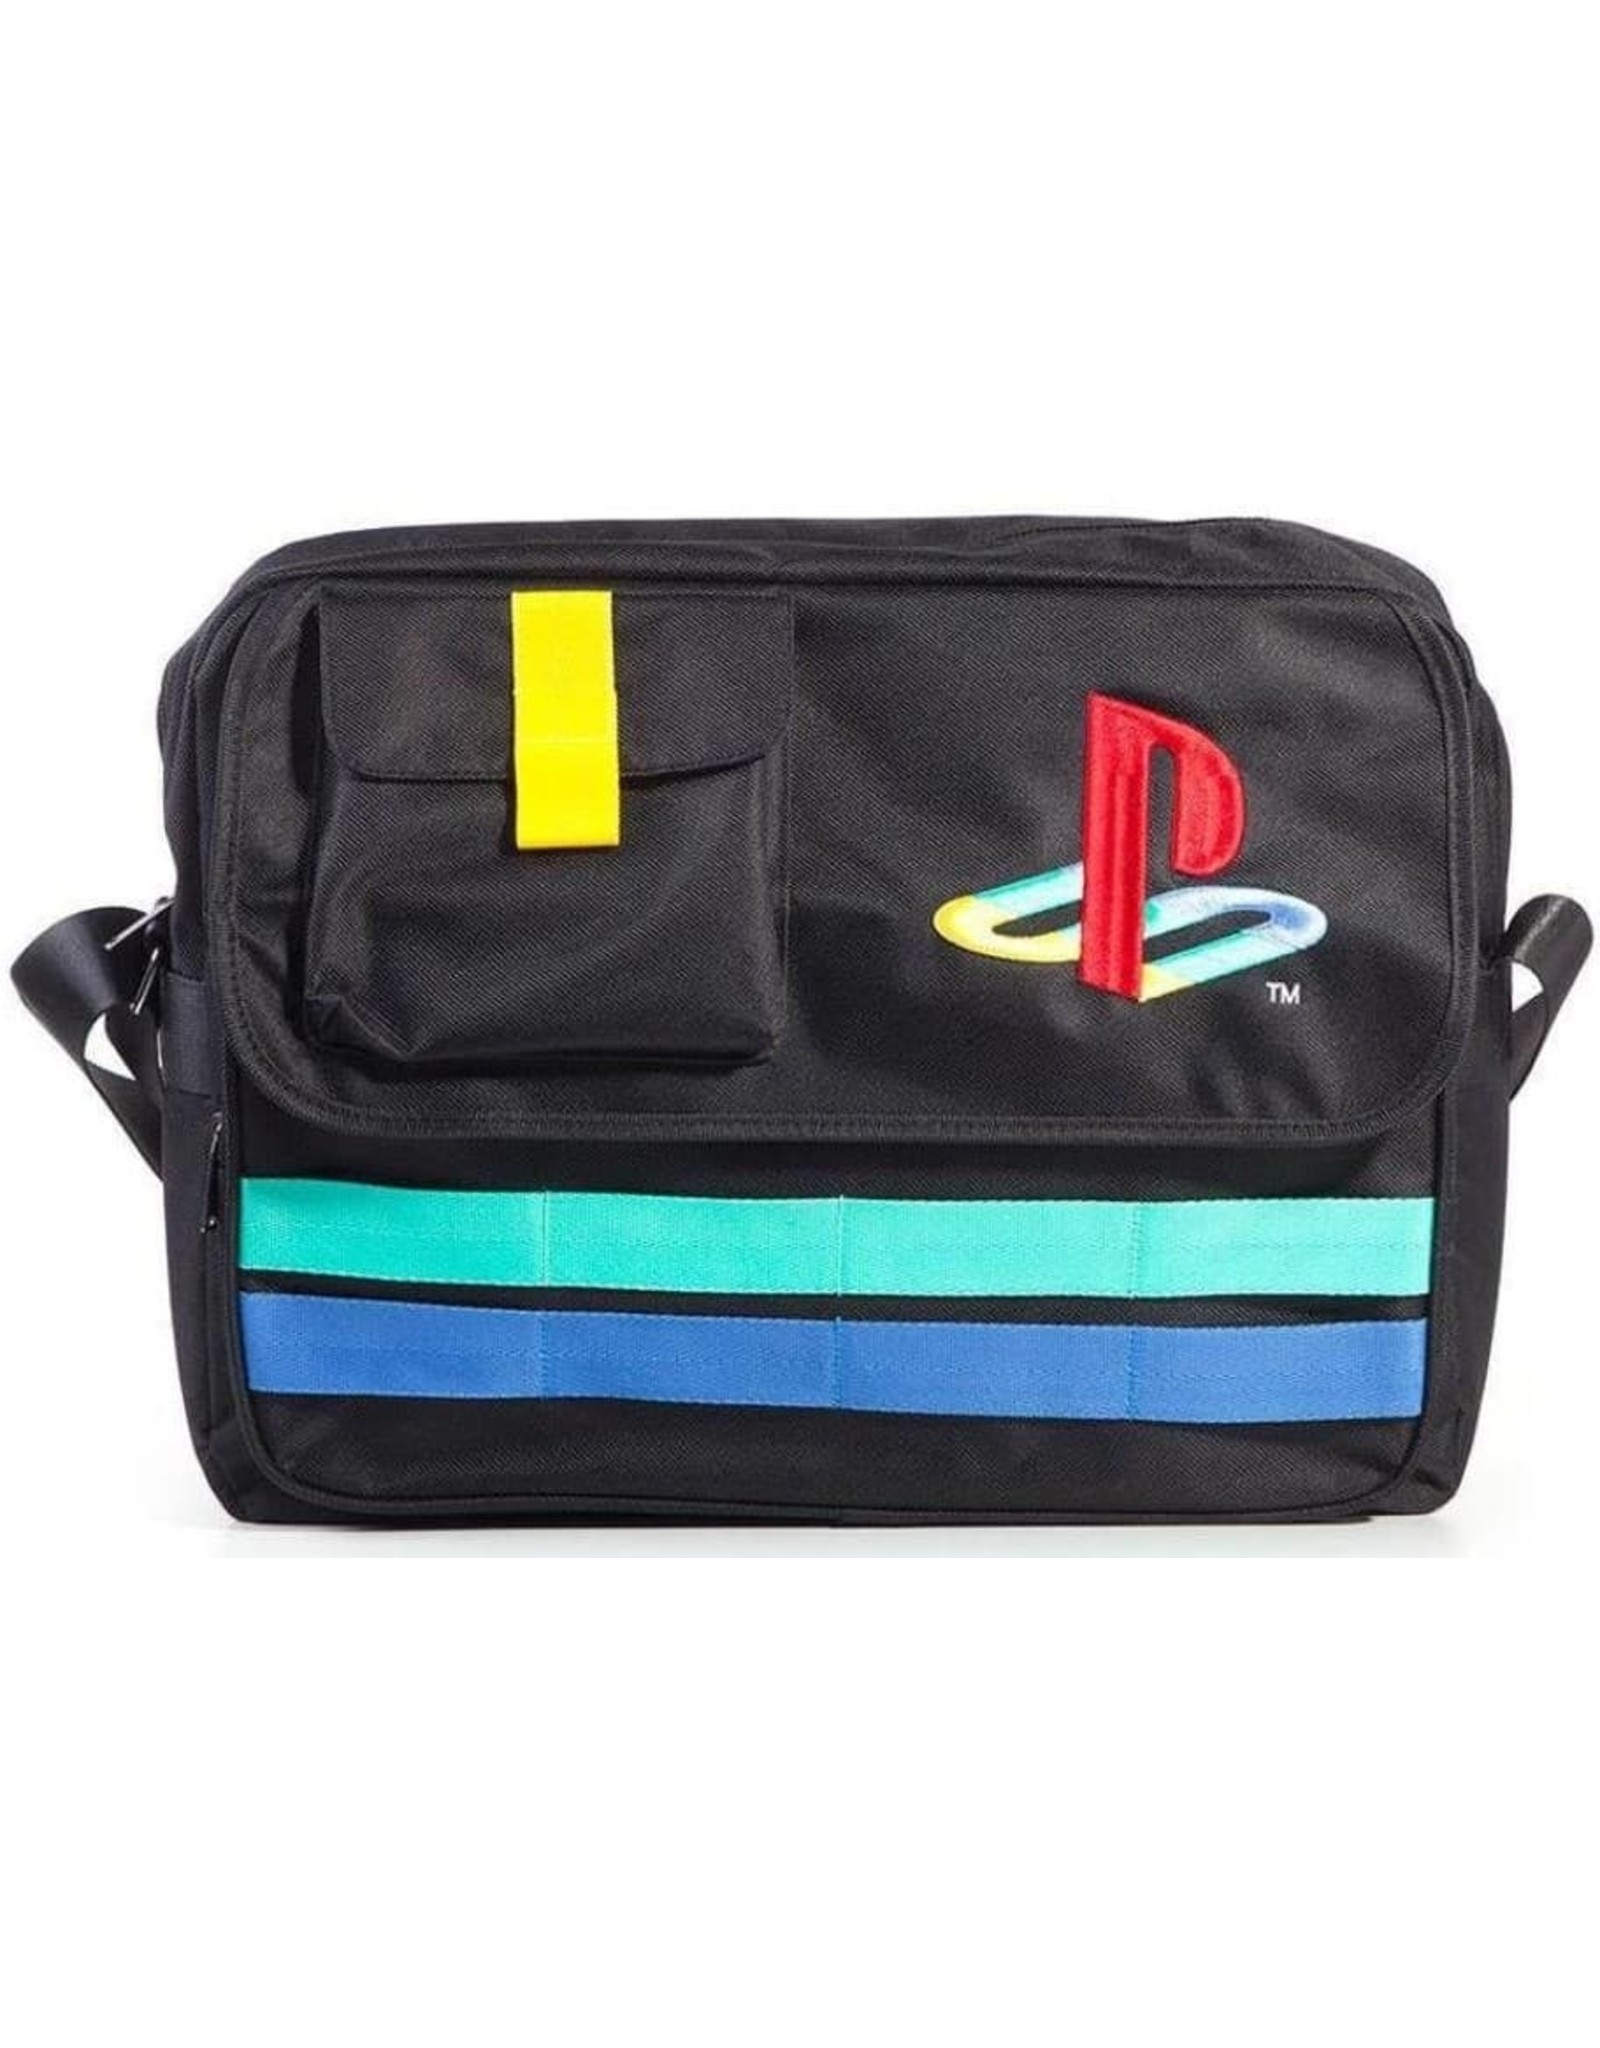 Playstation Merchandise tassen - Playstation messenger tas met geborduurd logo